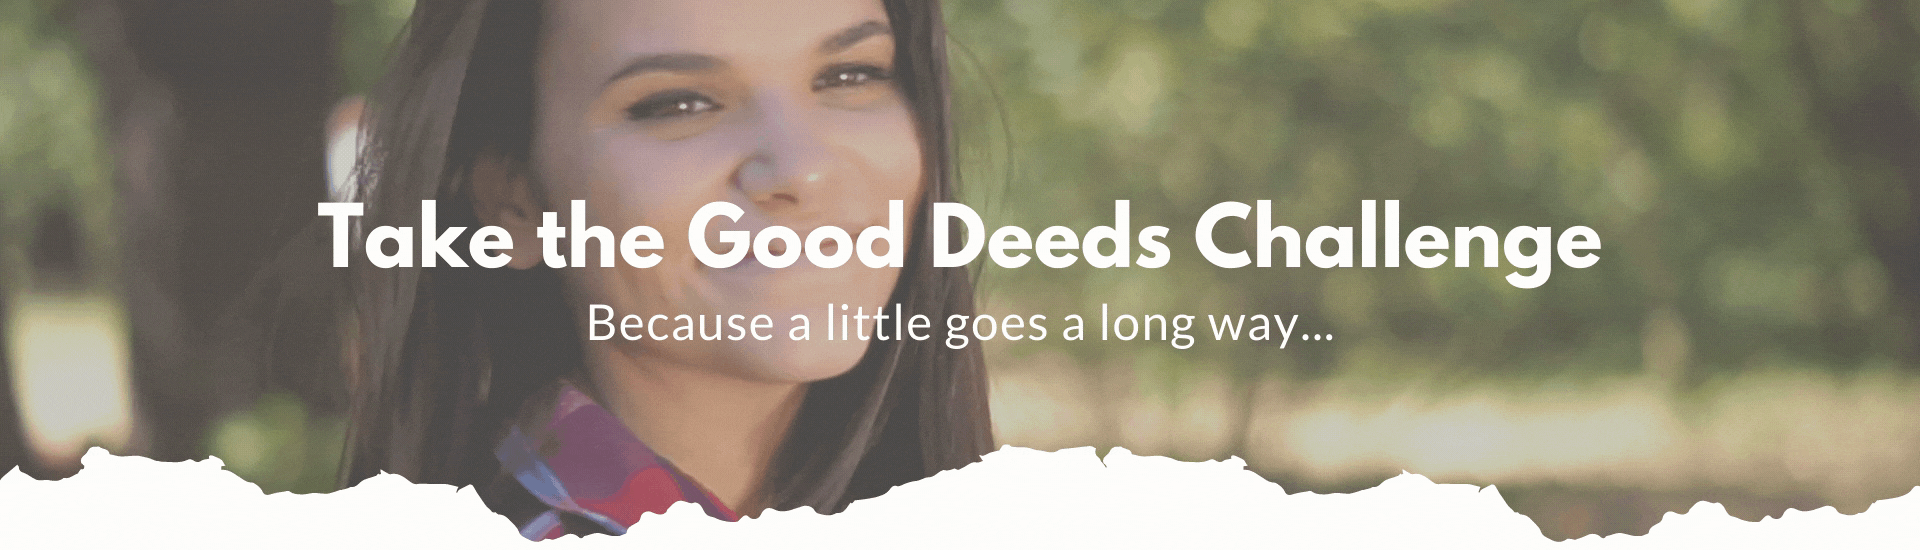 Take the Good Deeds Challenge